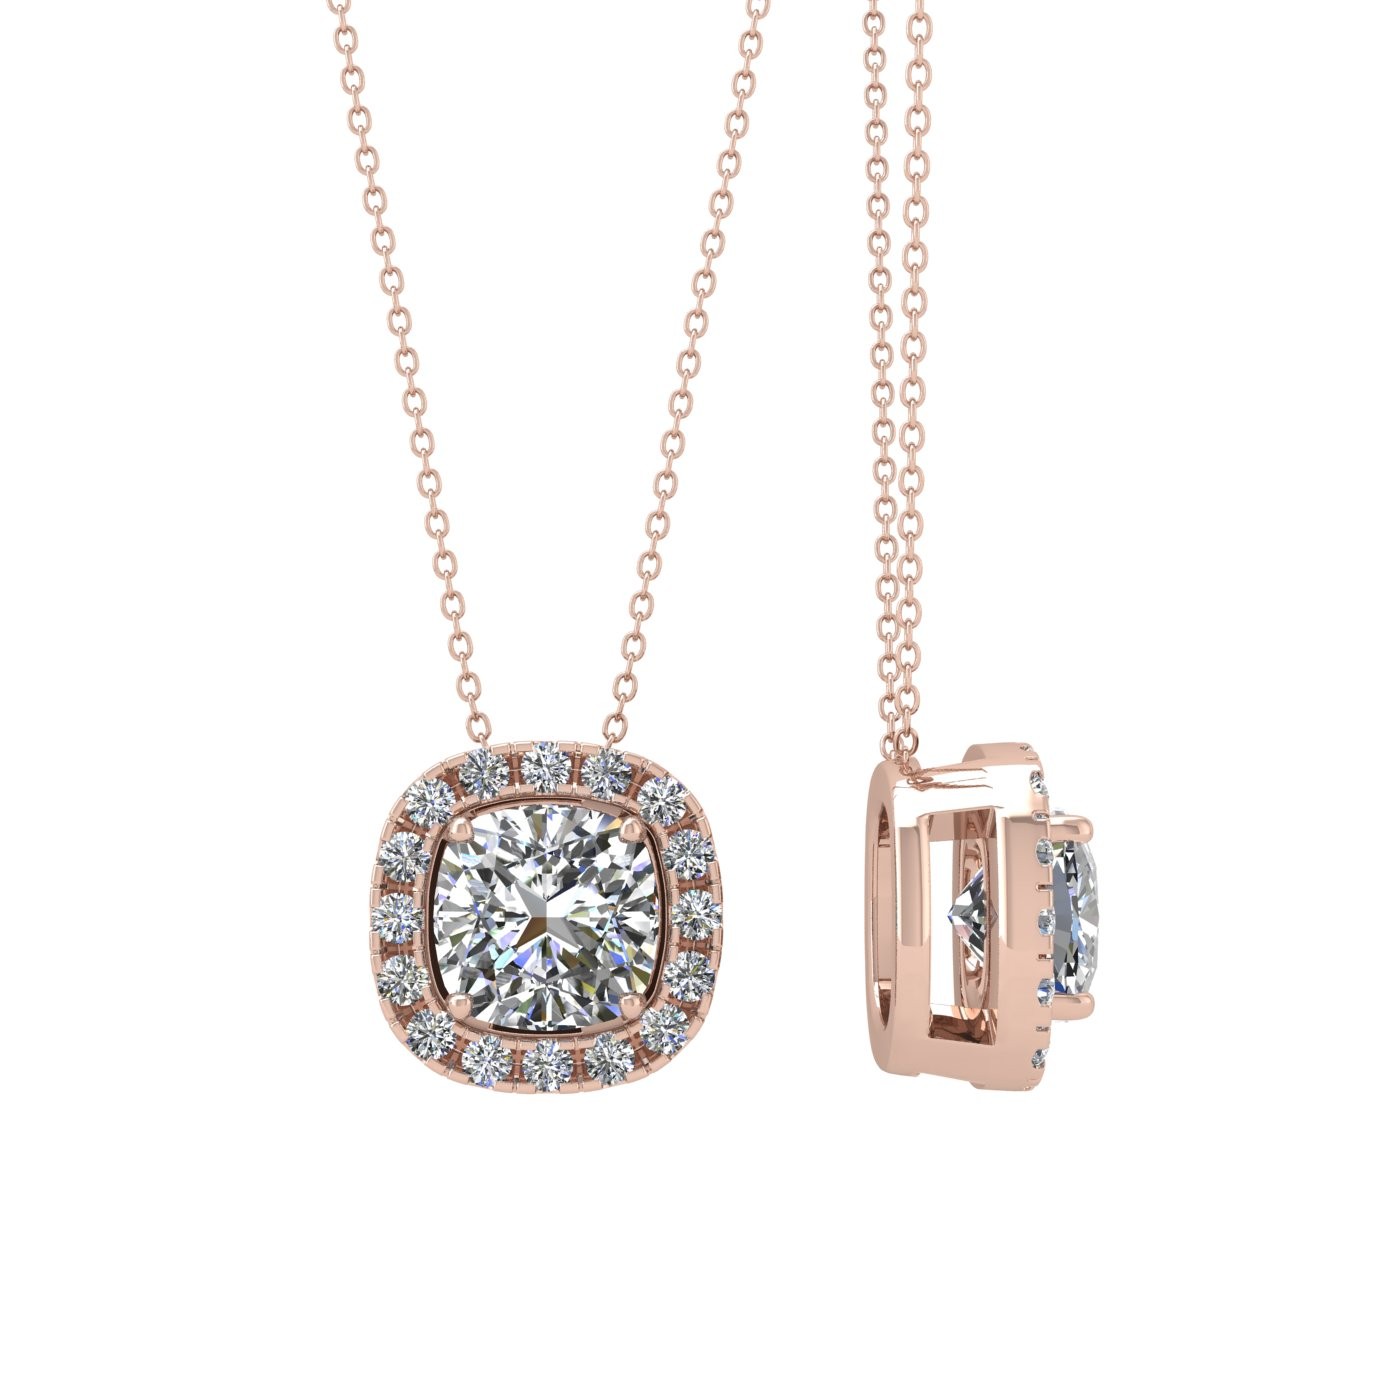 18k rose gold  0,7 ct 4 prongs cushion shape diamond pendant with diamond pavÉ set halo